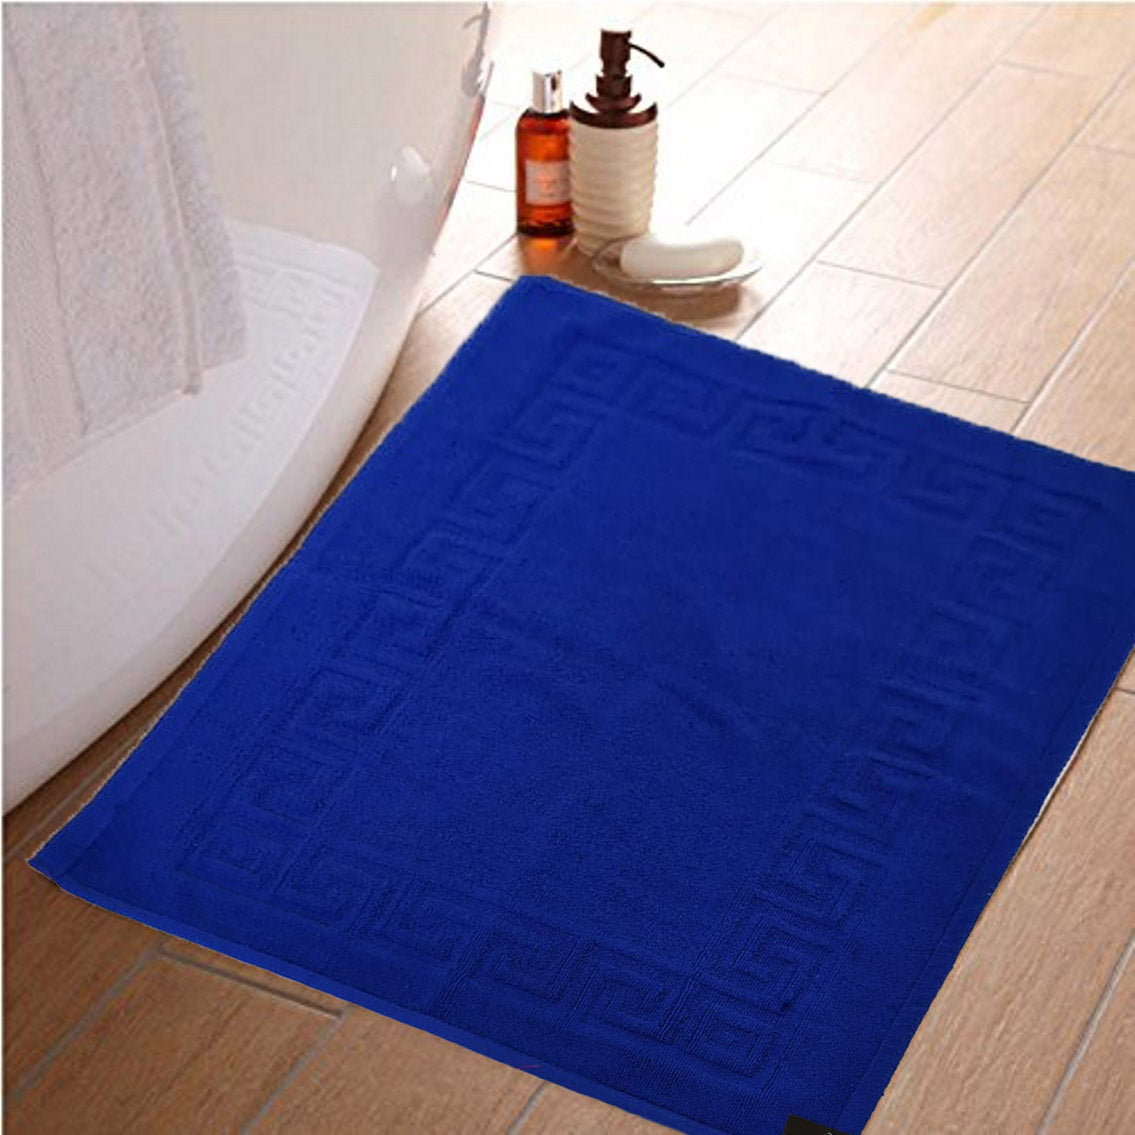 Lushomes bathroom Mat, Super Soft Terry Cotton Floor mat for Hotel and Spa, Door Mats for Bathmat with Greek Border, Floor Towel Mat, cotton mat (Single Pc, Blue, 50x77 cms)